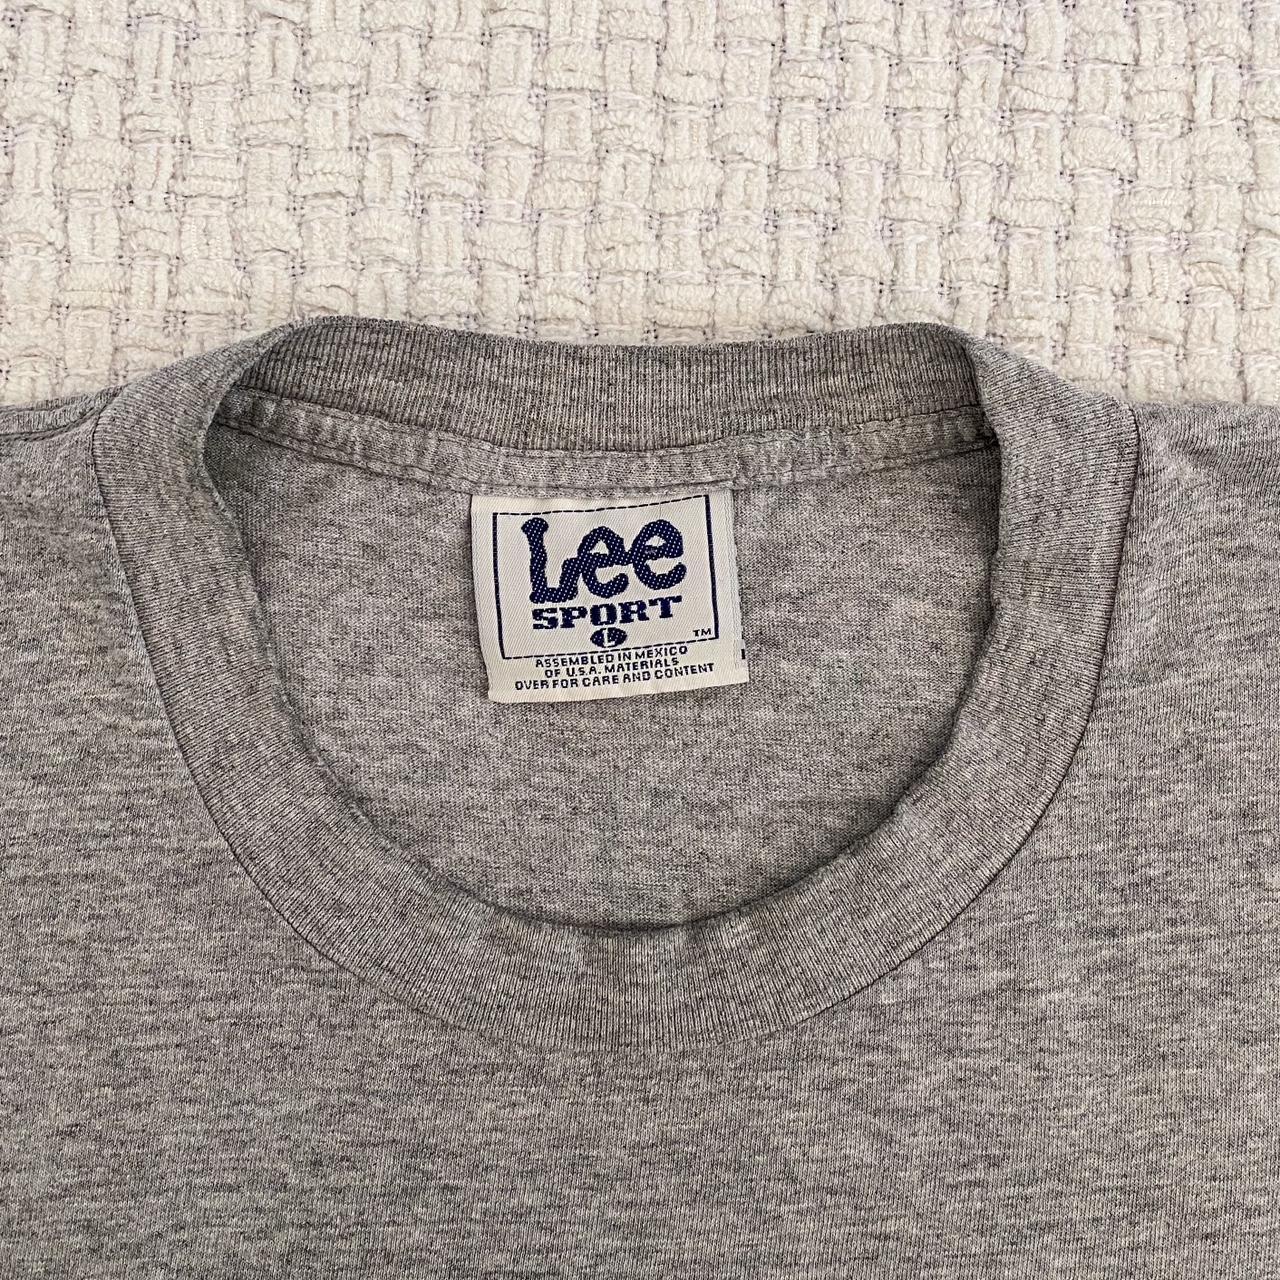 XXL 2001 Lee Sport Yankees AL East Champions t-shirt - Depop